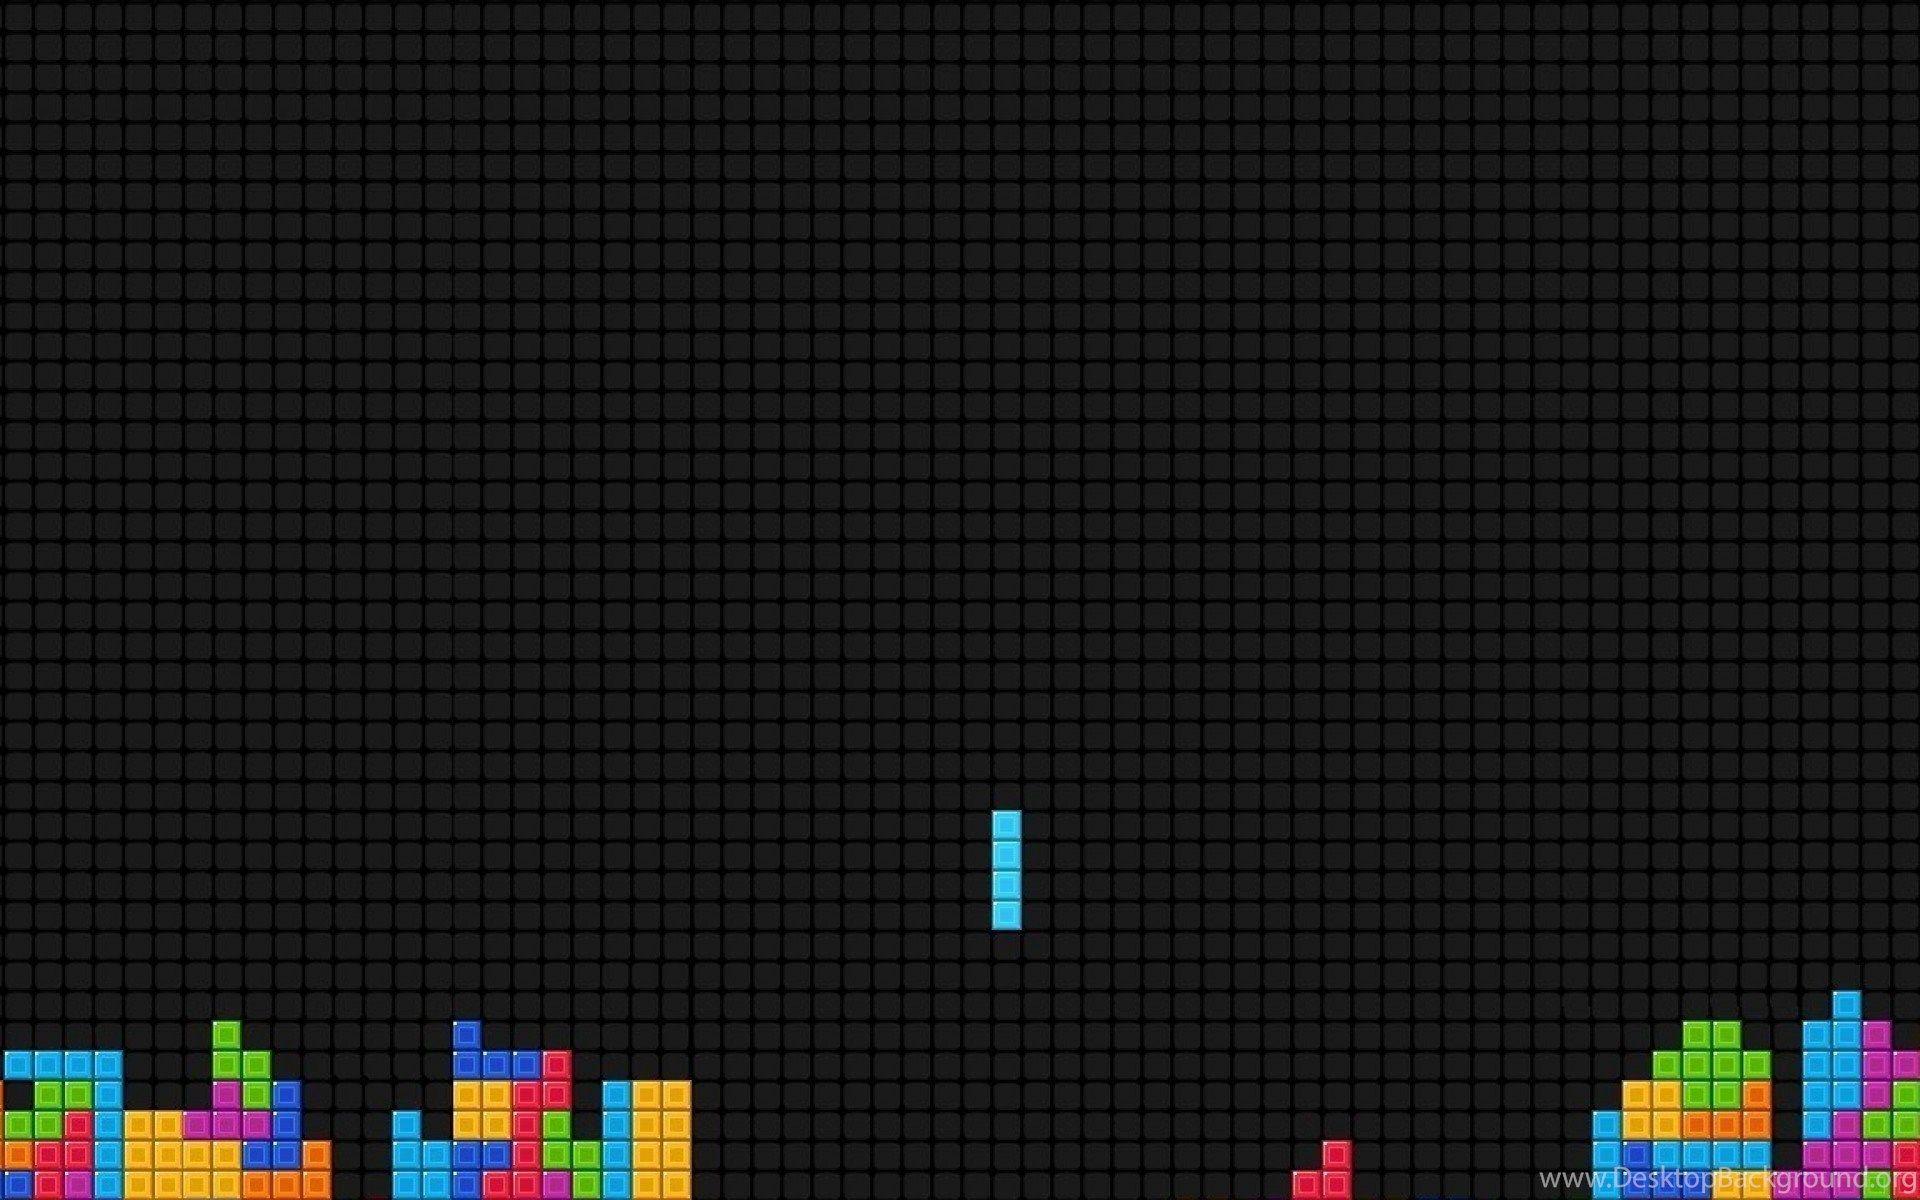 Tetris Wallpapers Top Free Tetris Backgrounds Wallpaperaccess